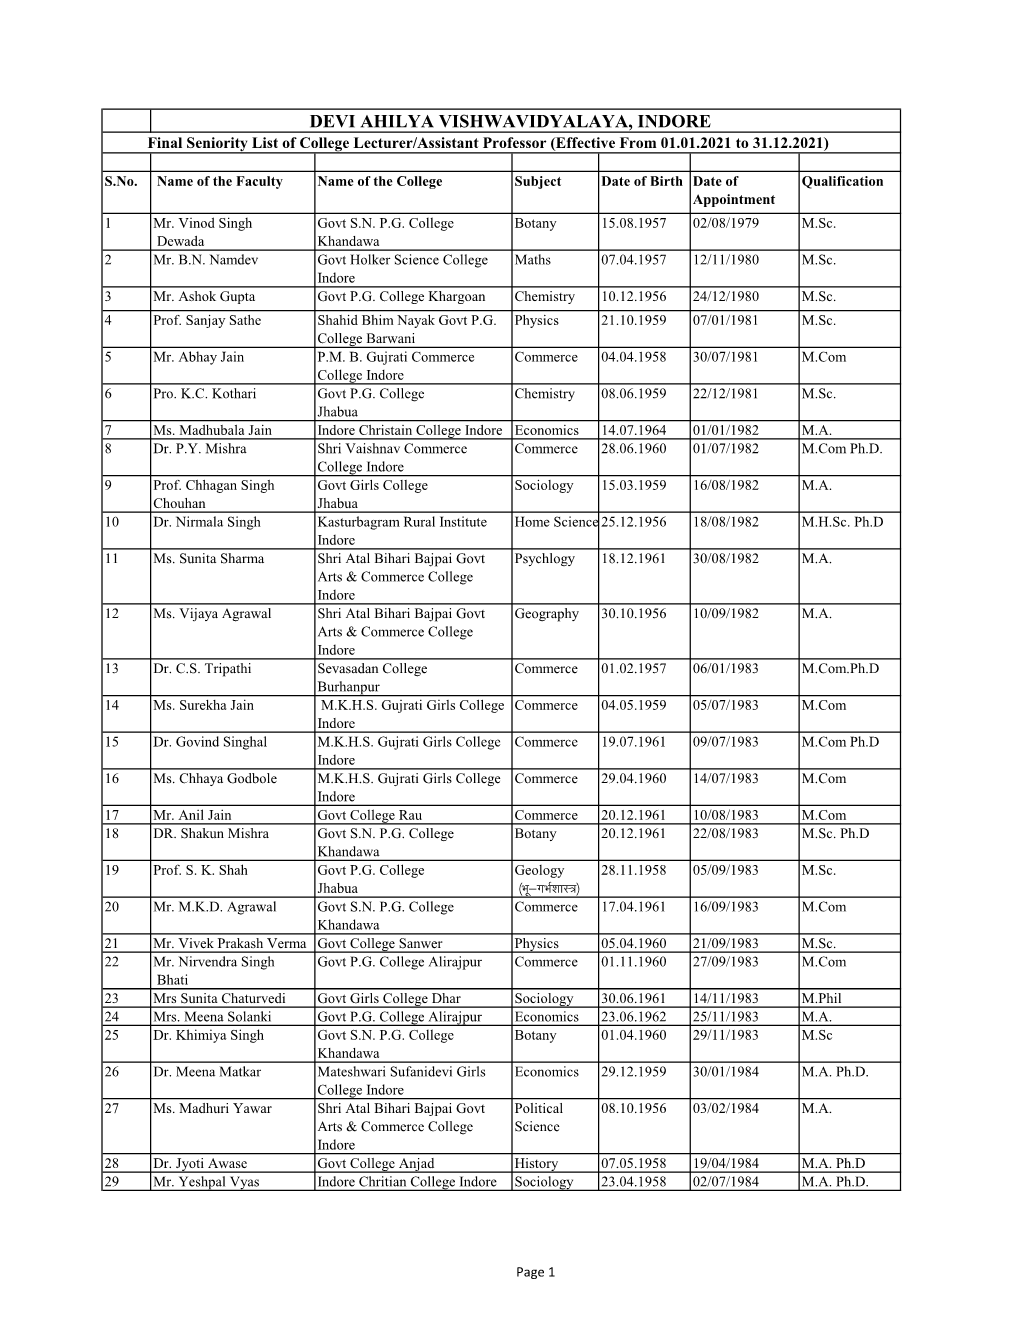 DEVI AHILYA VISHWAVIDYALAYA, INDORE Final Seniority List of College Lecturer/Assistant Professor (Effective from 01.01.2021 to 31.12.2021)